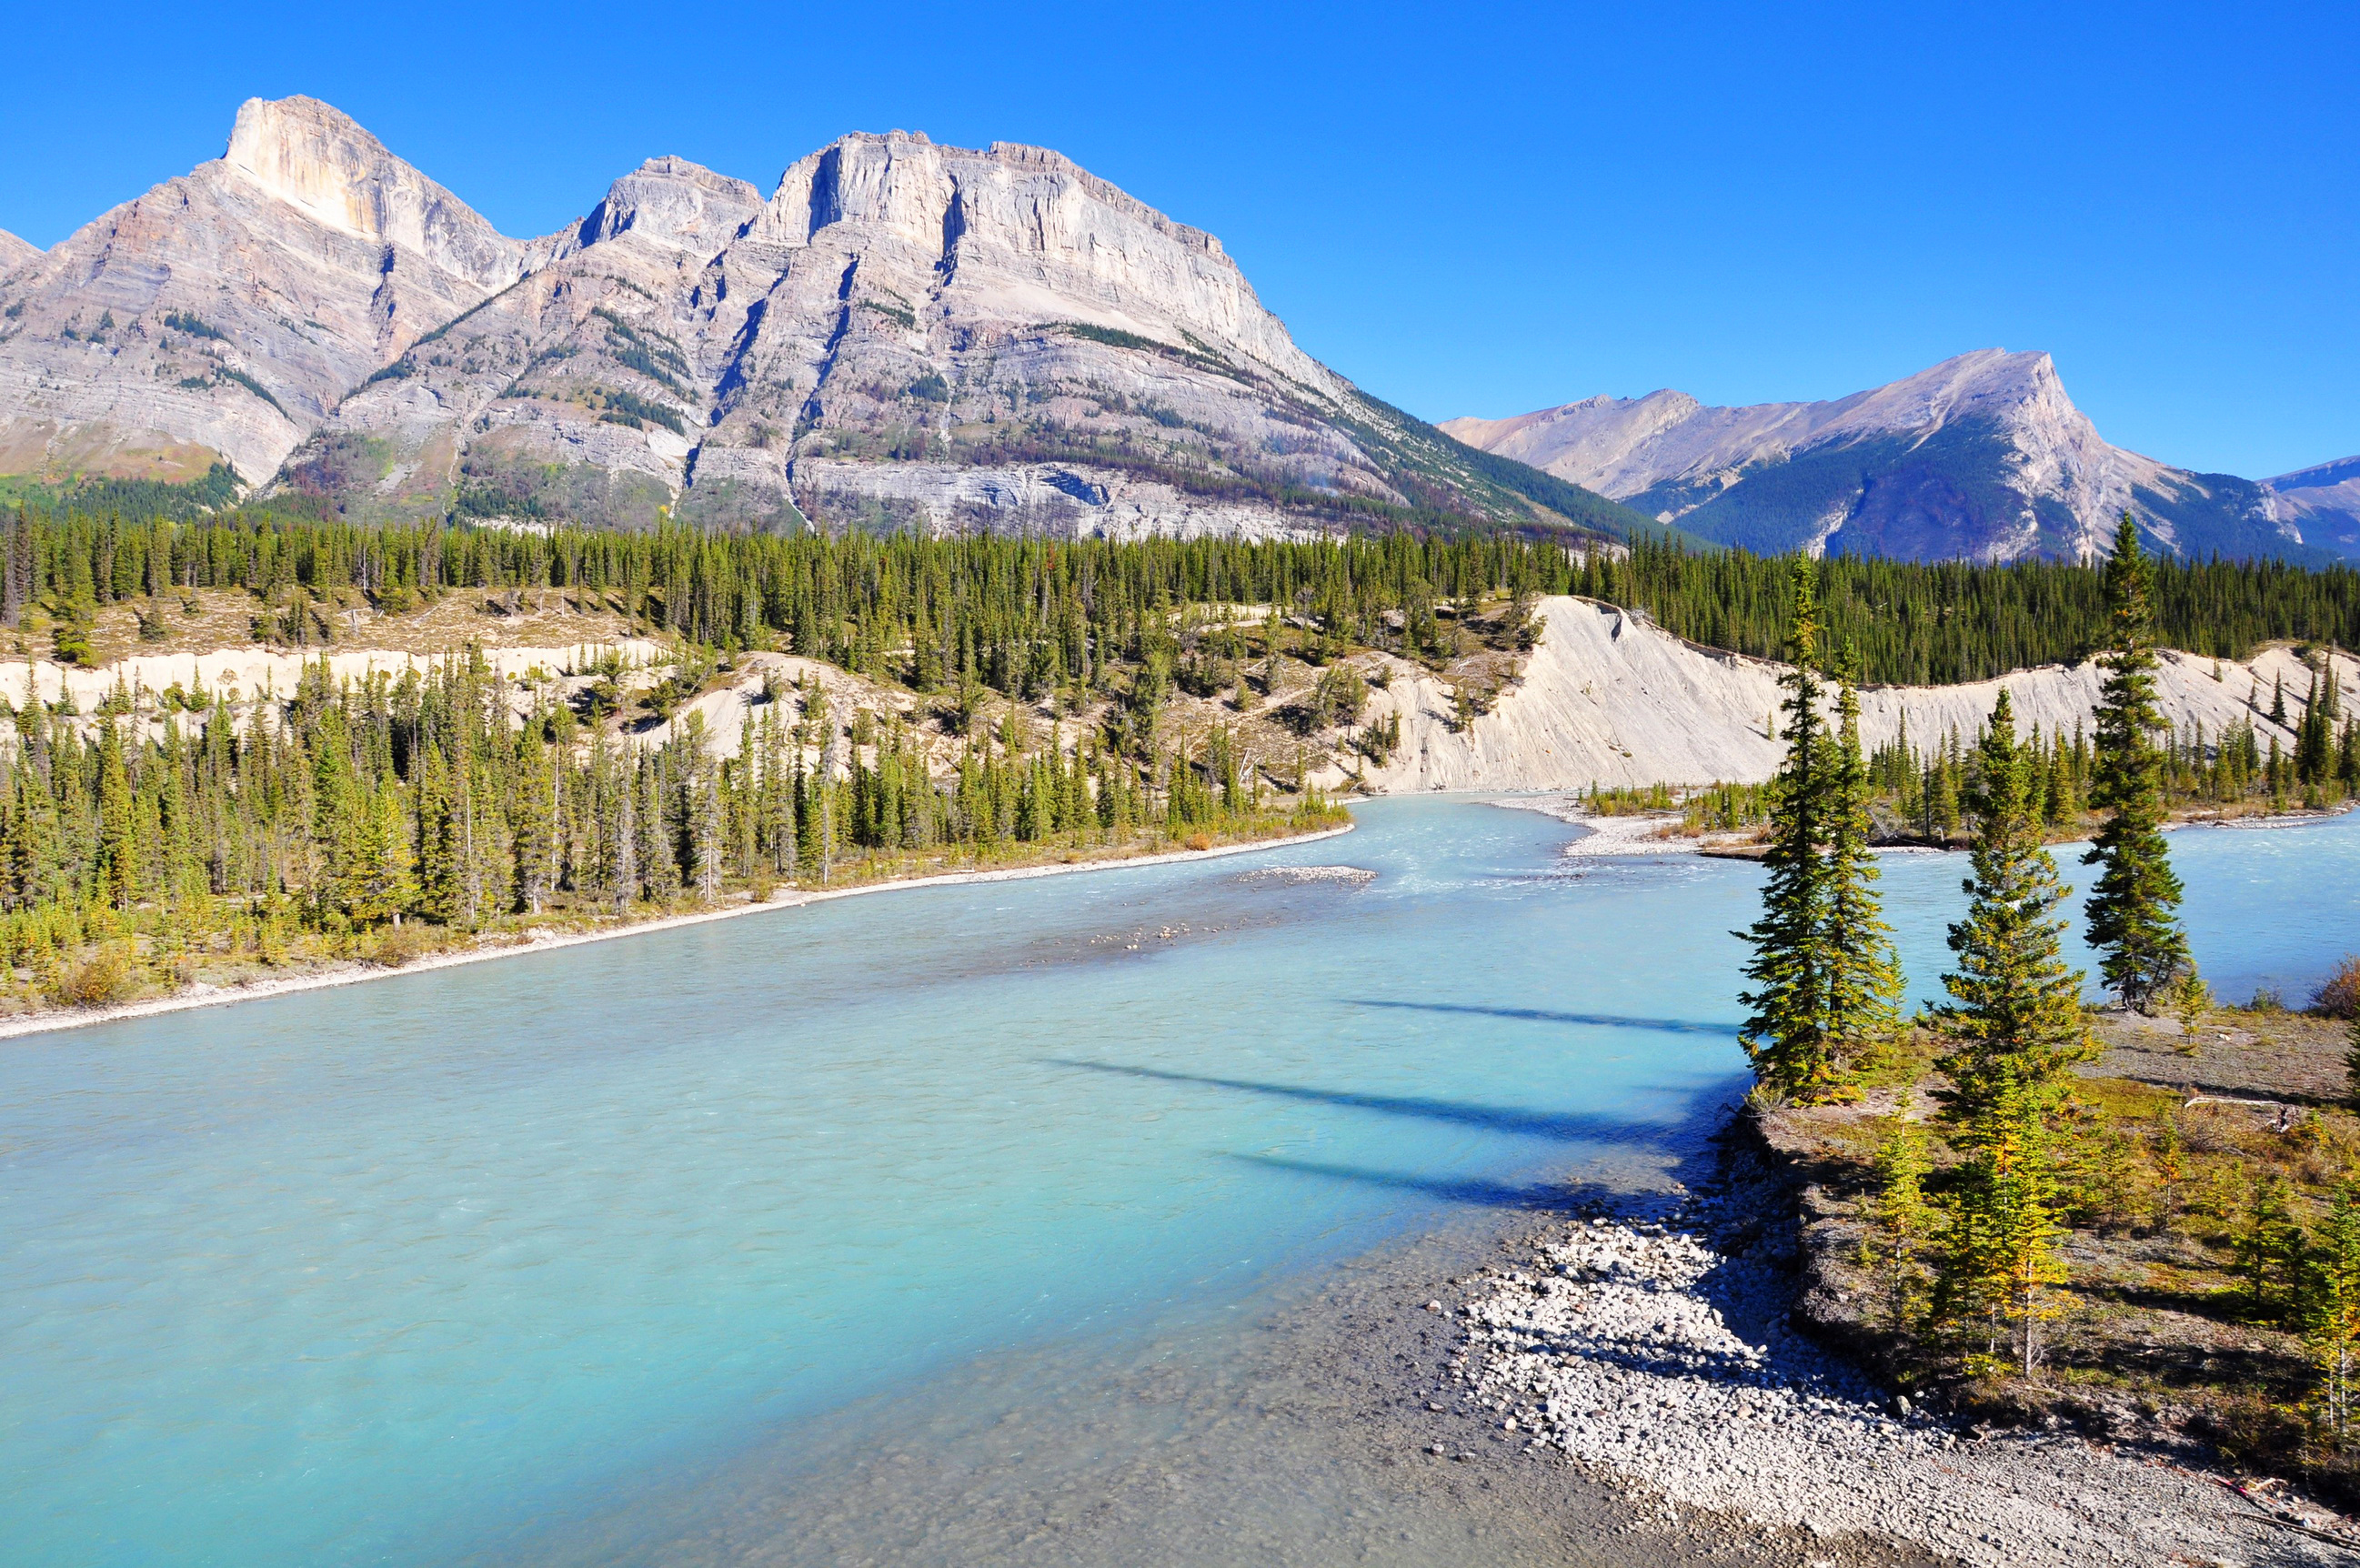 Descarga gratis la imagen Paisaje, Naturaleza, Rio, Montaña, Canadá, Bosque, Parque Nacional Banff, Tierra/naturaleza en el escritorio de tu PC